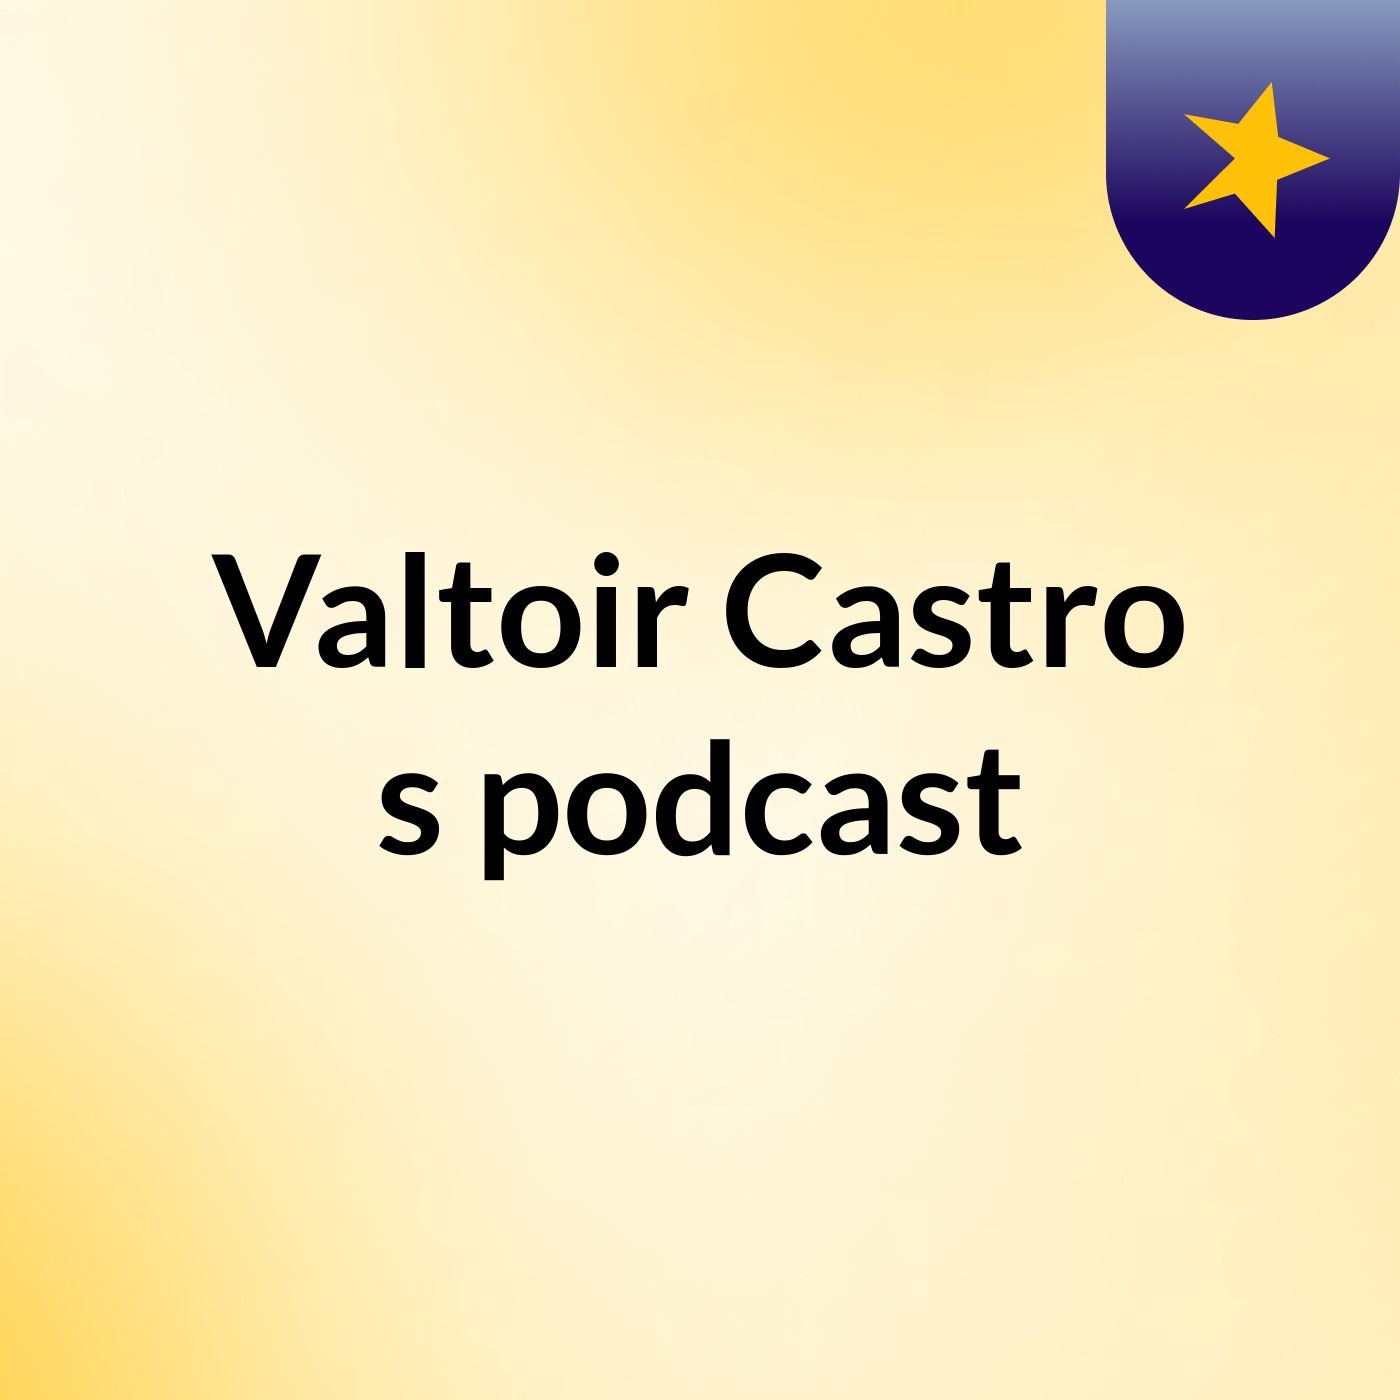 Valtoir Castro's podcast